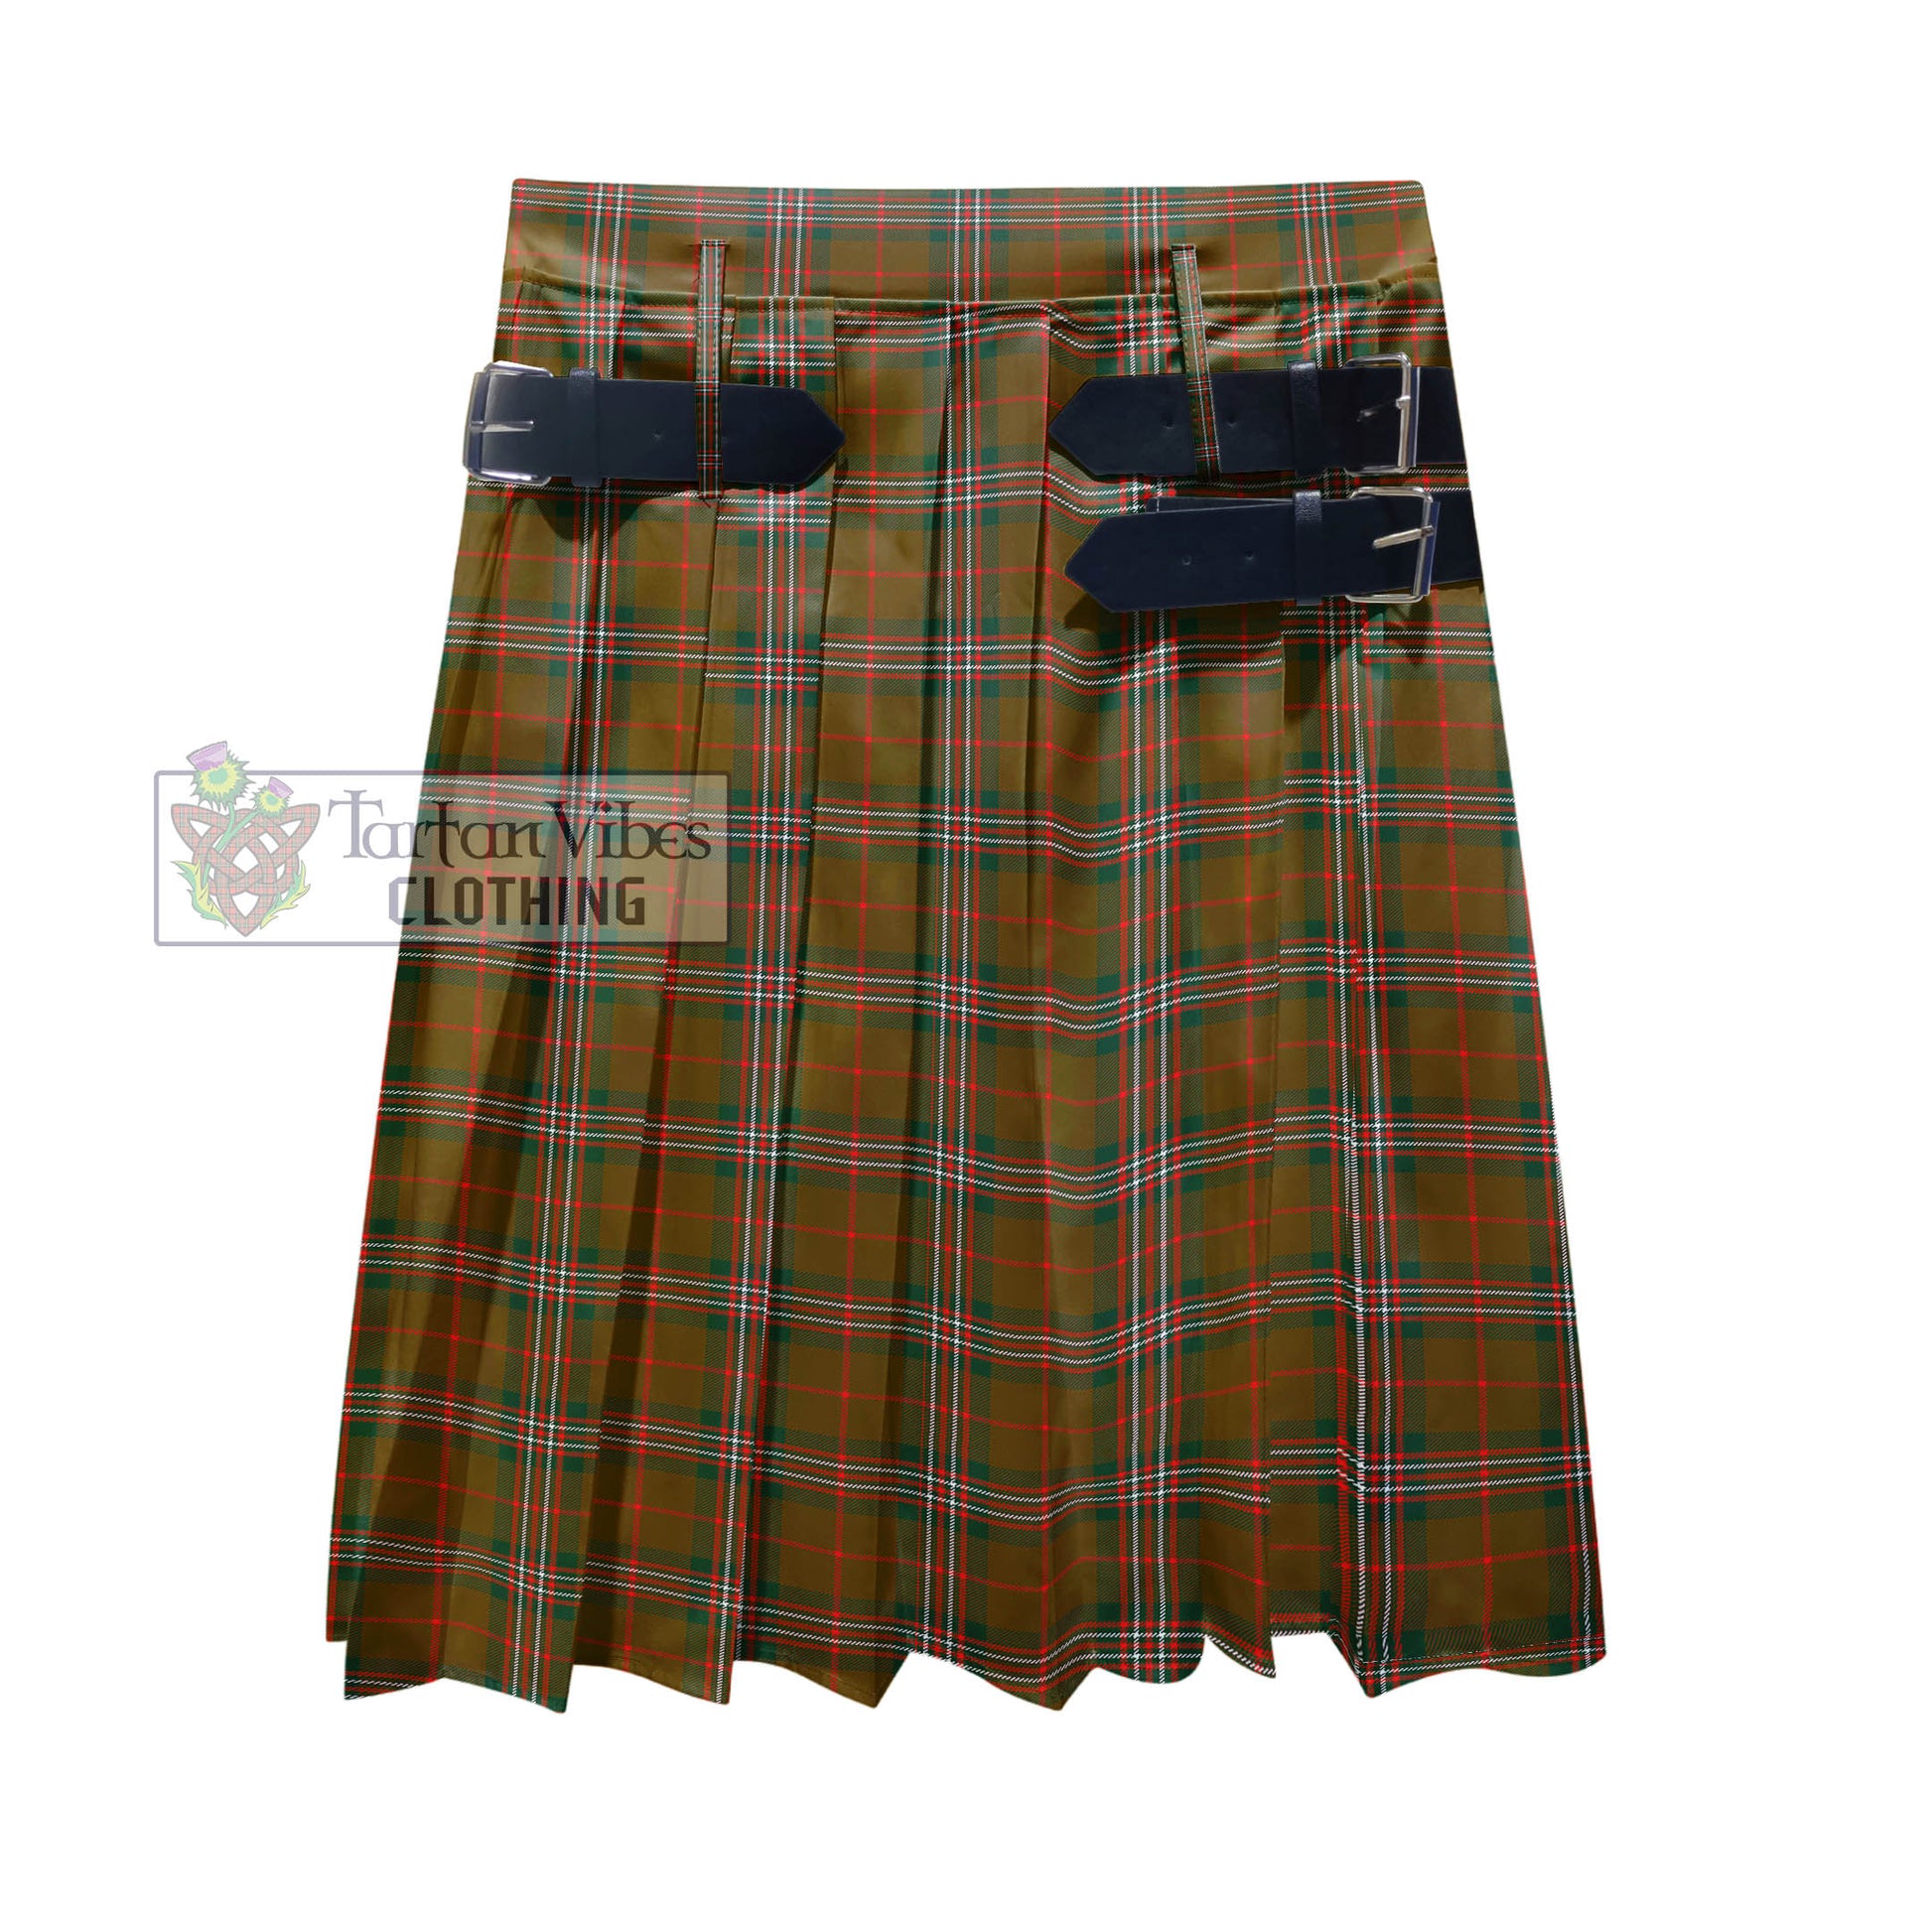 Tartan Vibes Clothing Scott Brown Modern Tartan Men's Pleated Skirt - Fashion Casual Retro Scottish Style